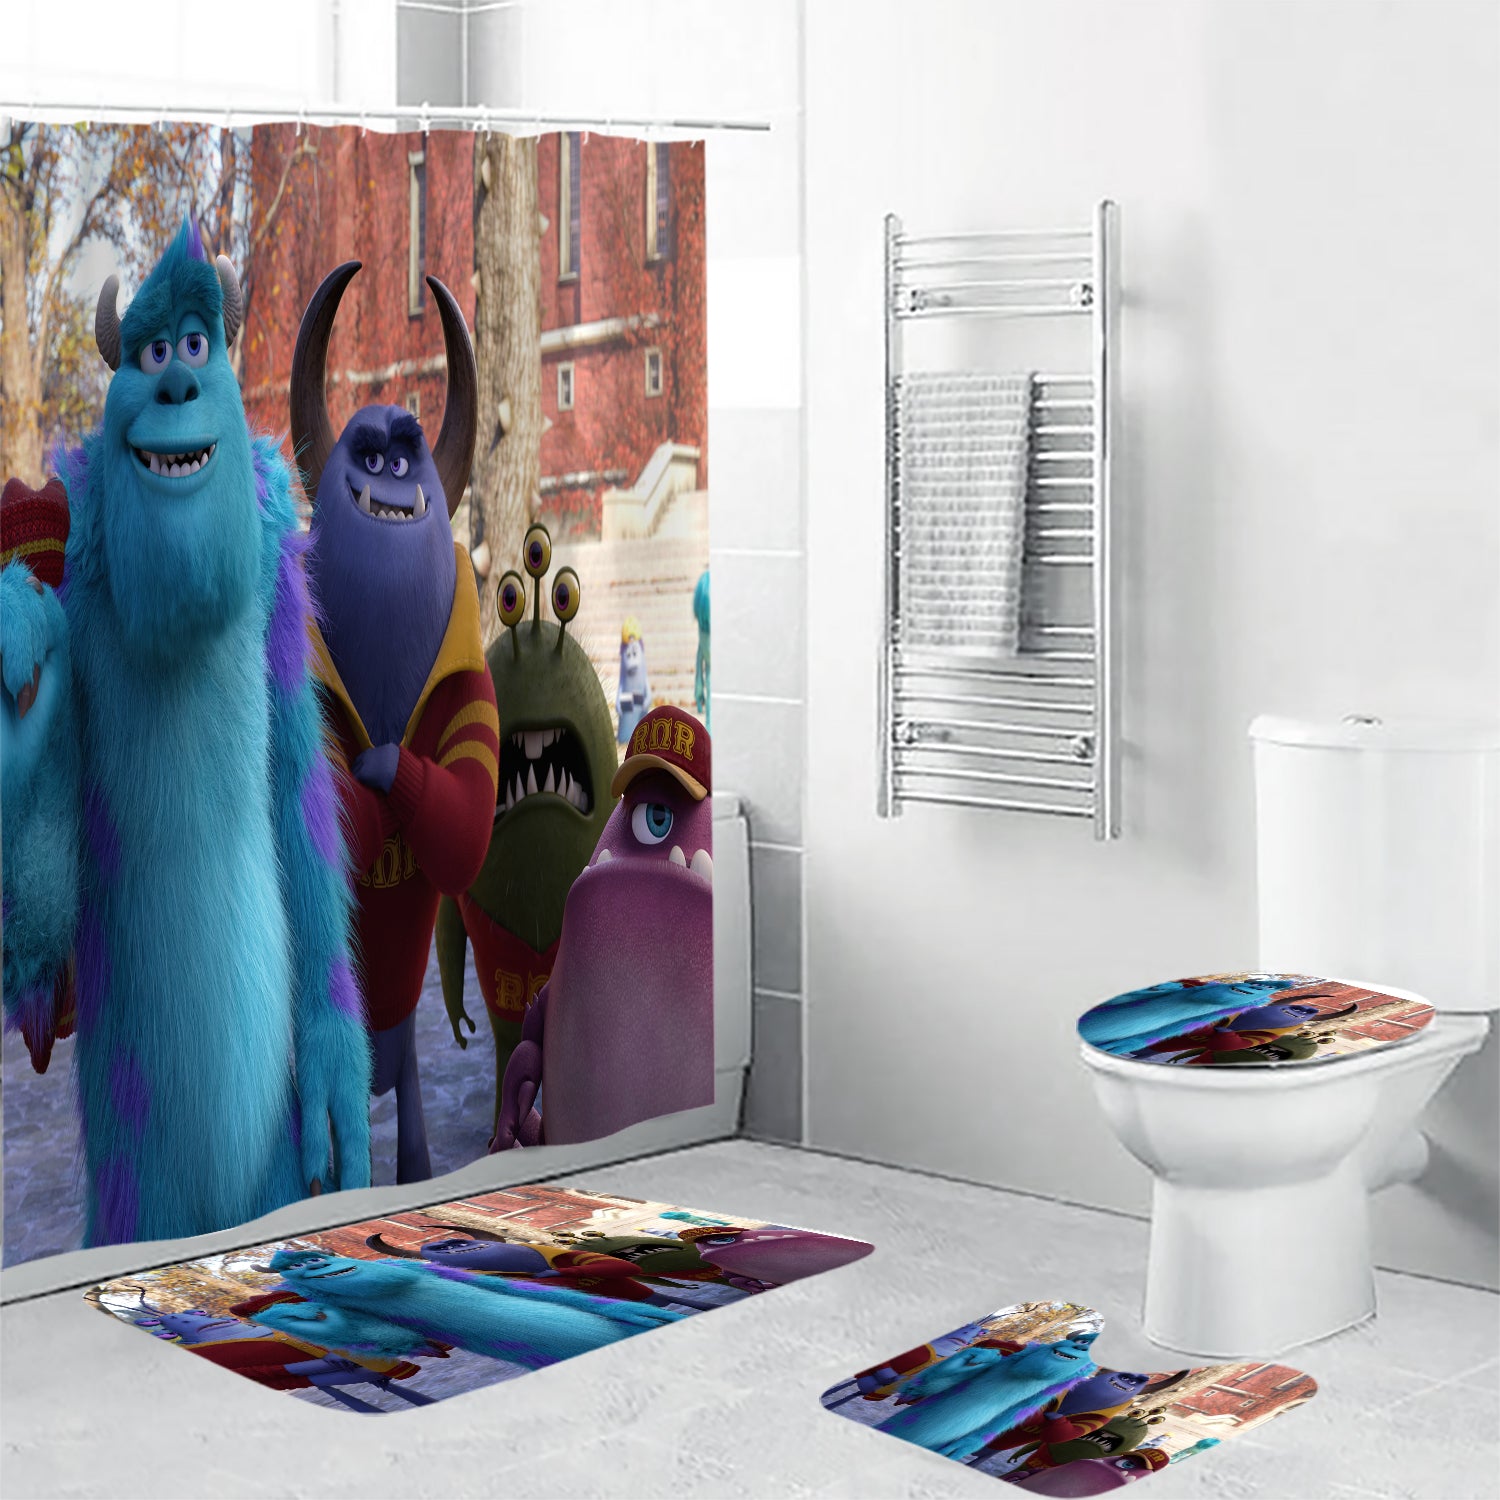 Characters v17 Monsters Inc Monsters University Movie Disney Pixar Waterproof Shower Curtain Non-Slip Toilet Lid Cover Bath Mat - Bathroom Set